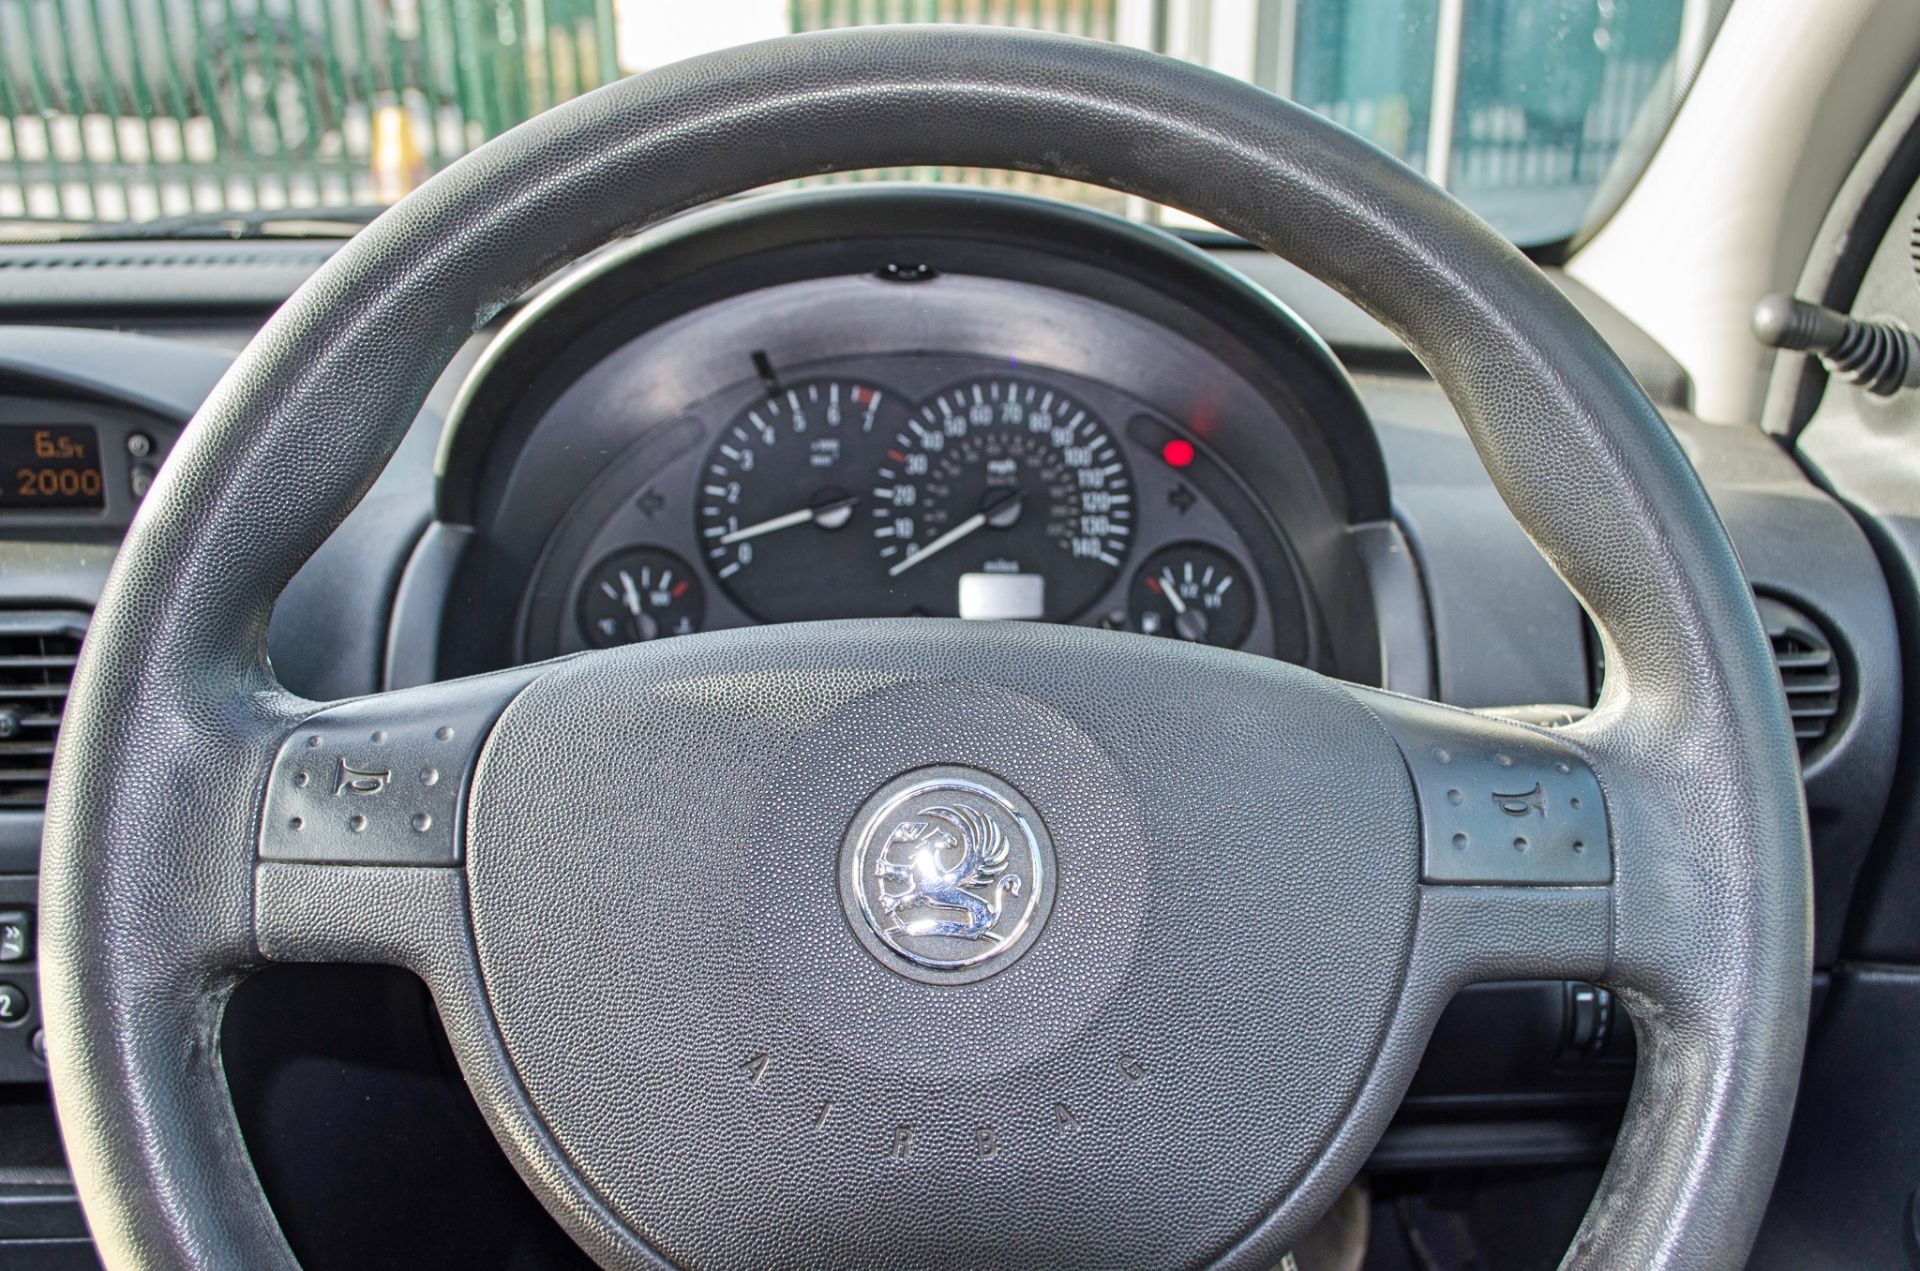 2003 Vauxhall Corsa GLS 16V 1199cc 5 door hatchback - Image 45 of 57